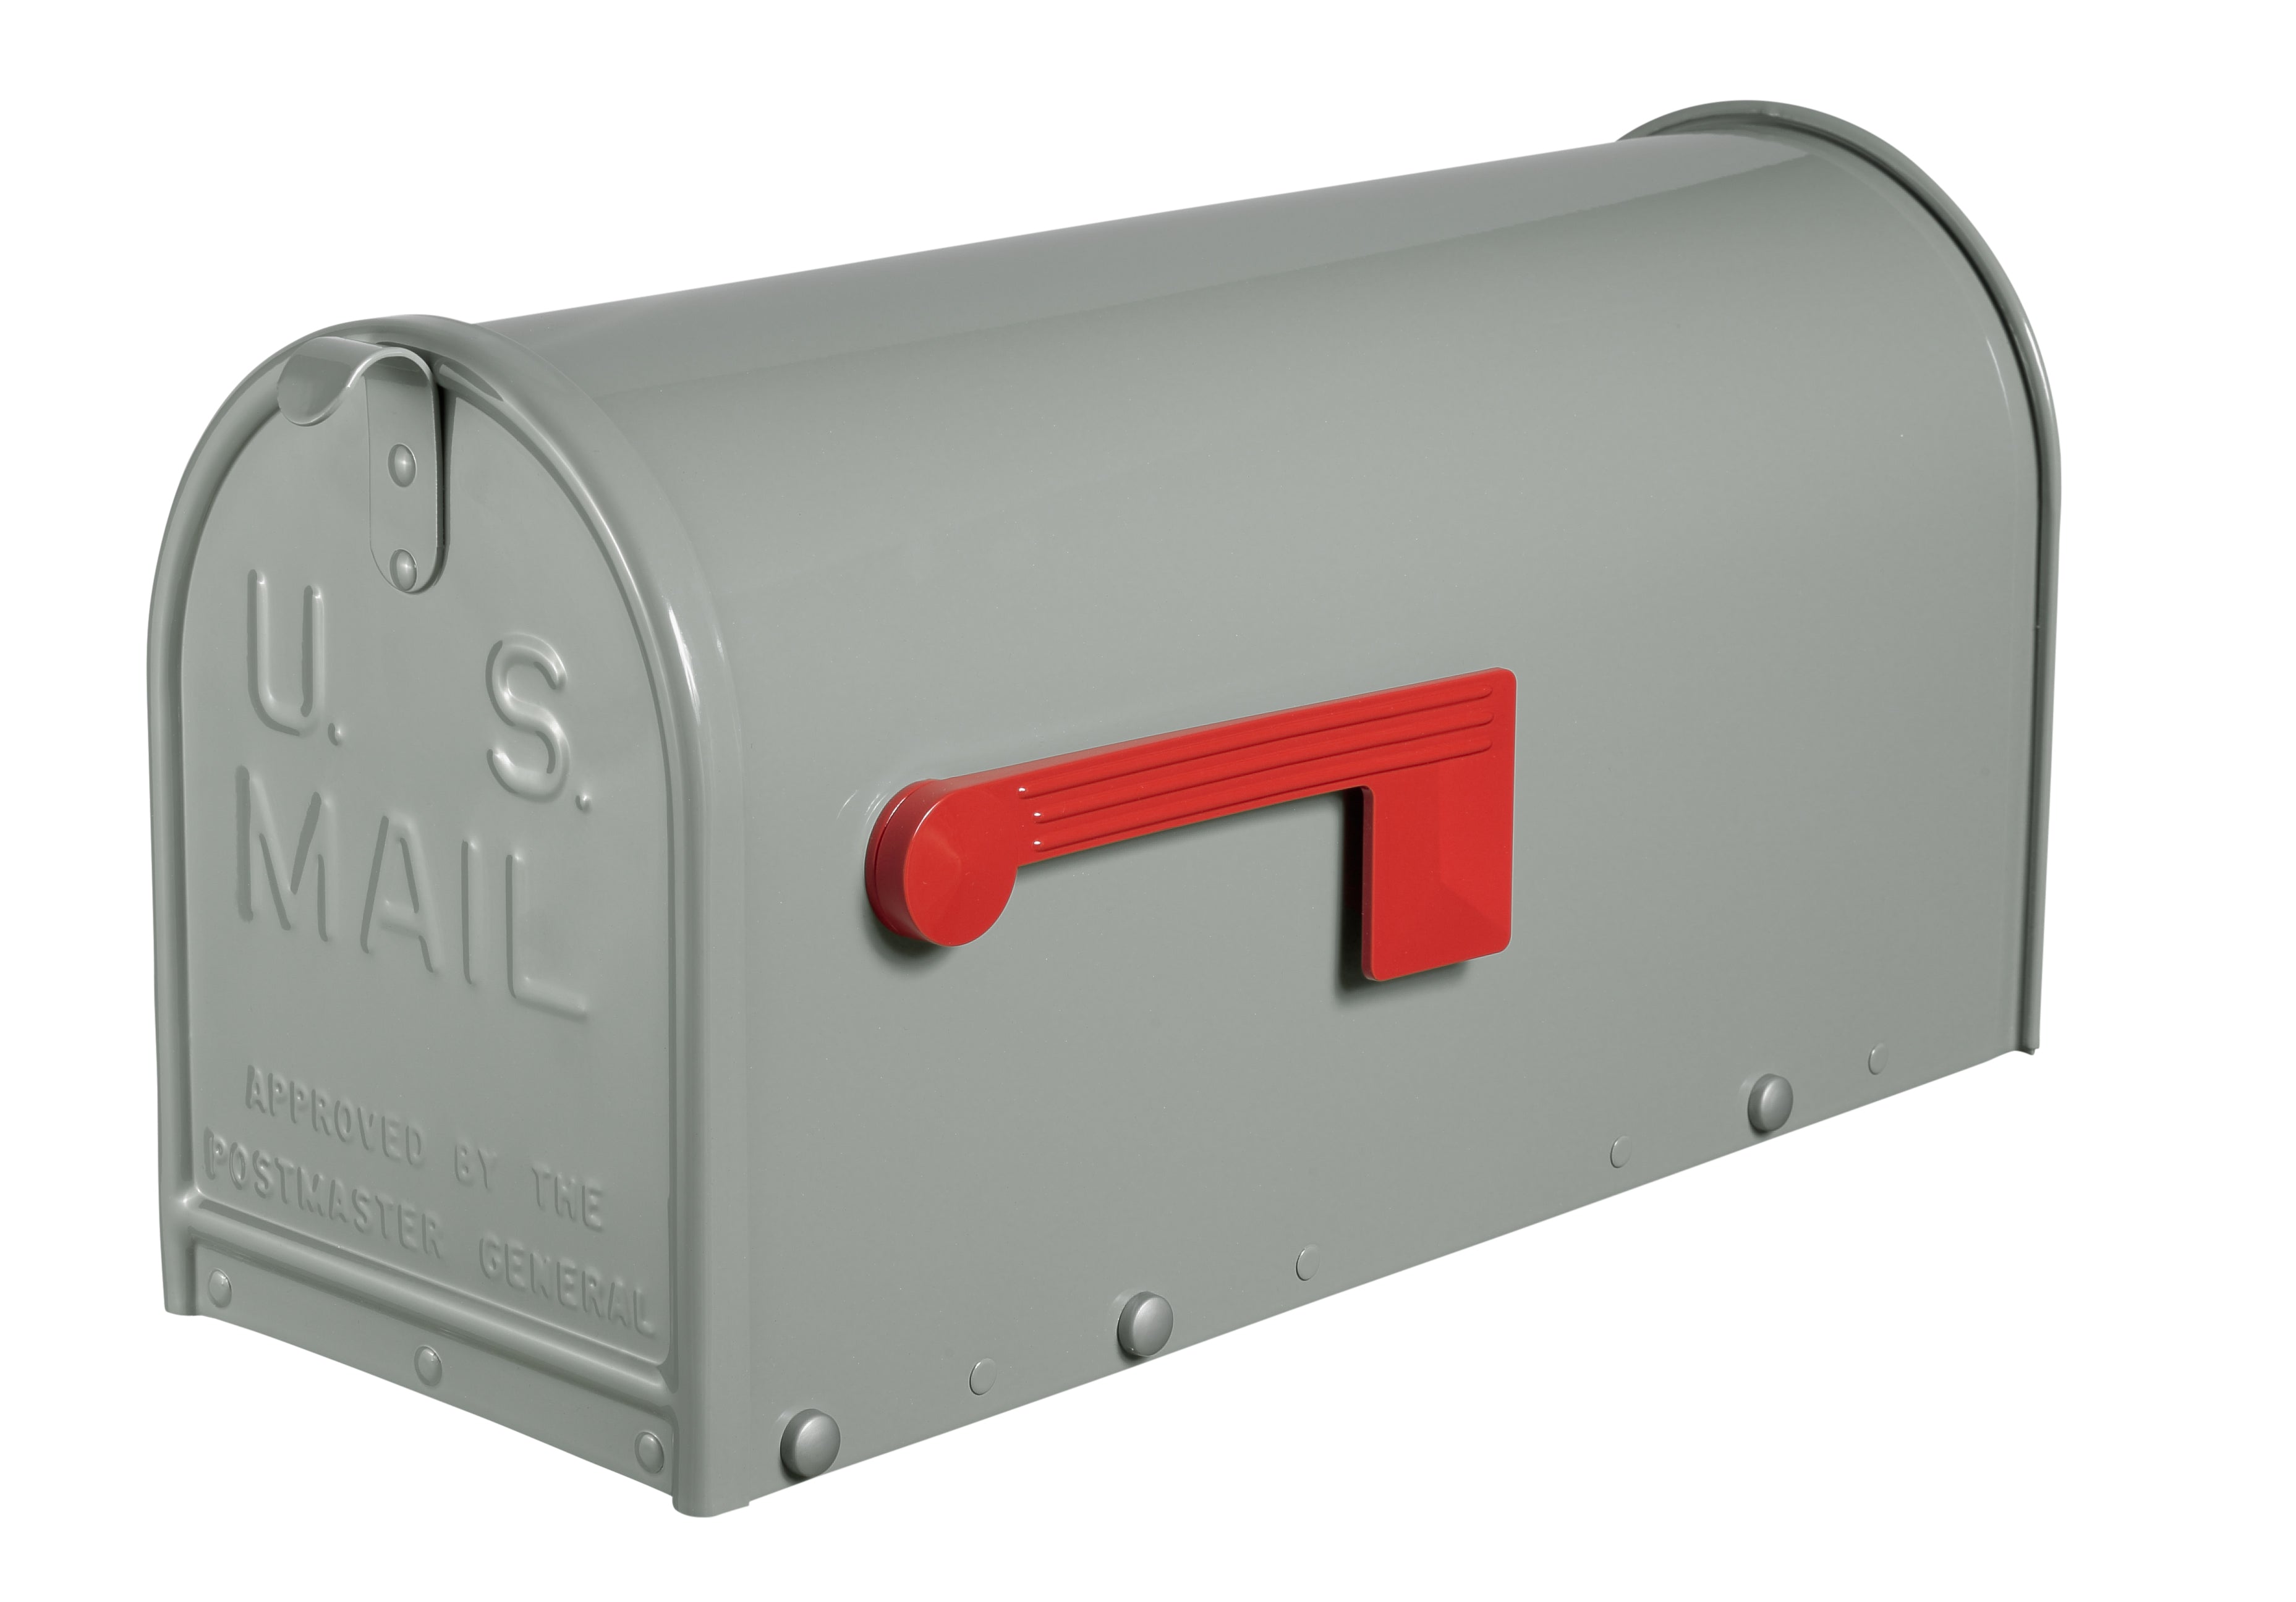 Janzer Mailbox